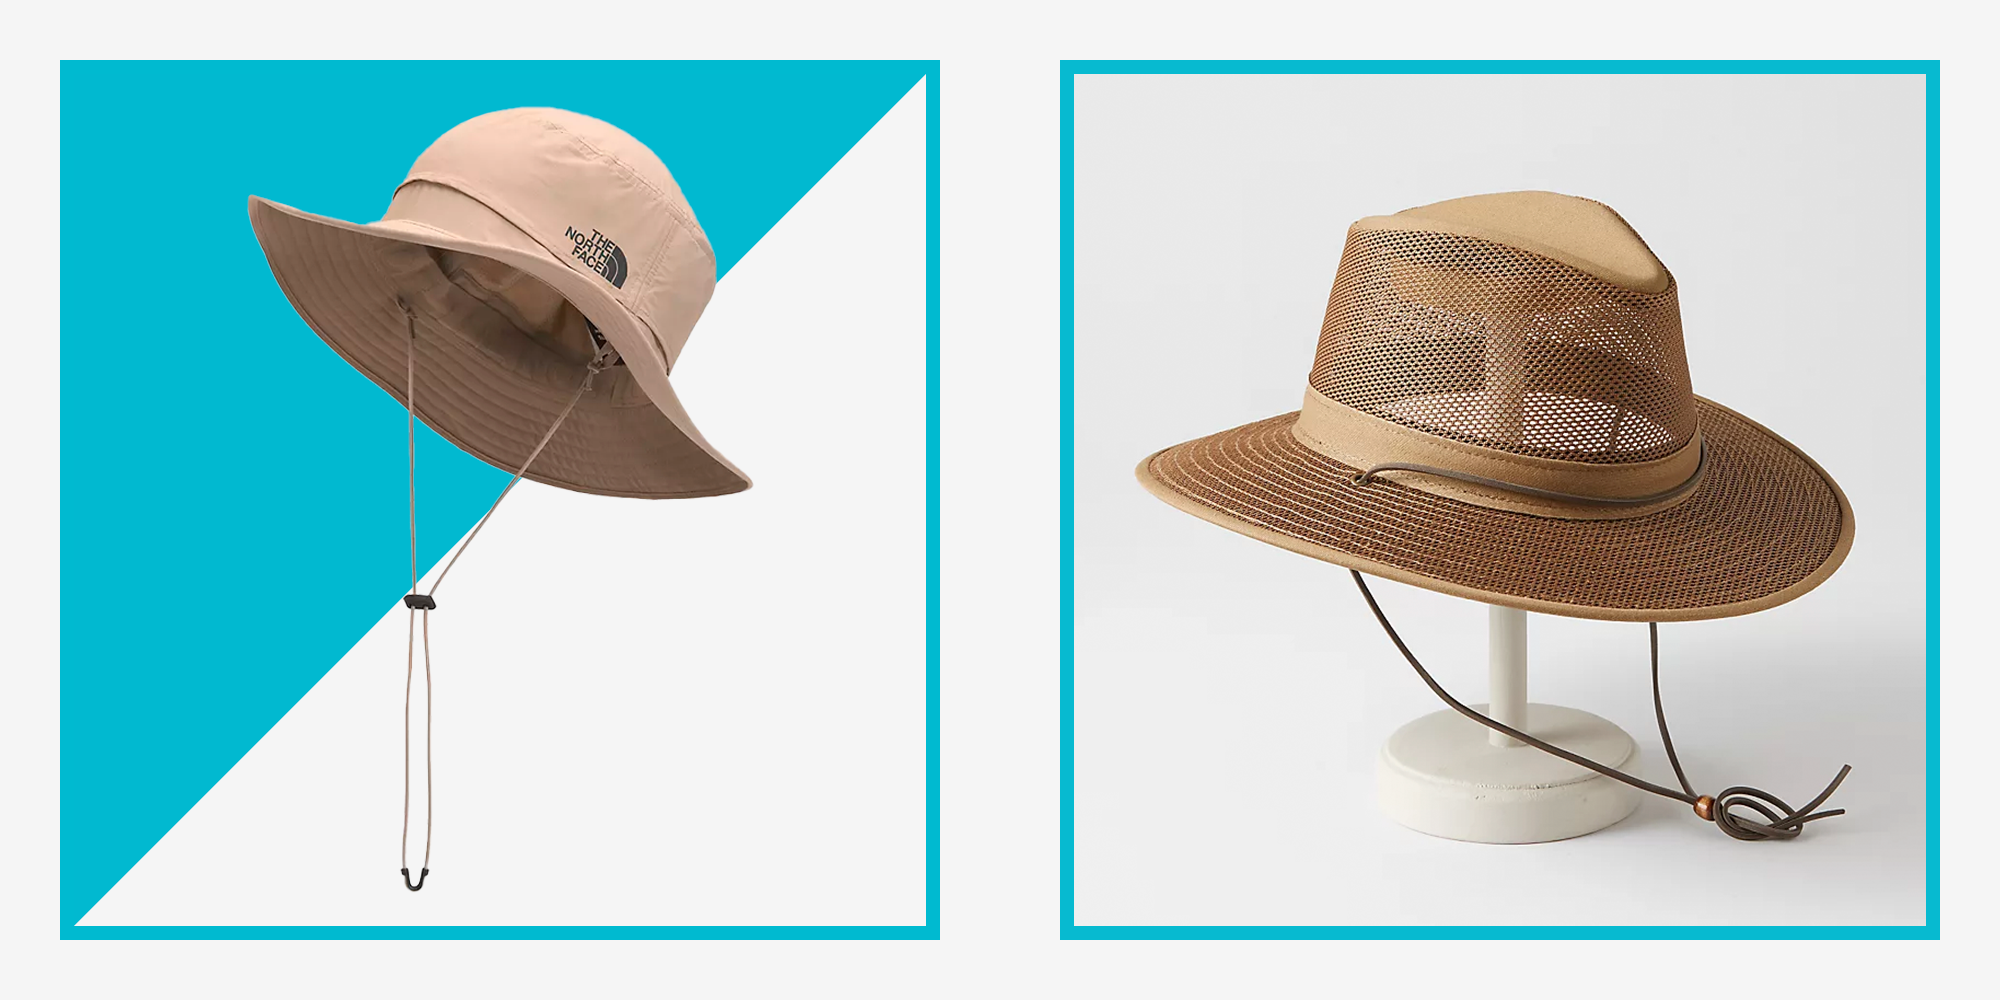 Enlarged Brim 360 Degree Sun Protection Outdoor hat Men's Sun Visor  Waterproof Fishing hat Mountaineering hat